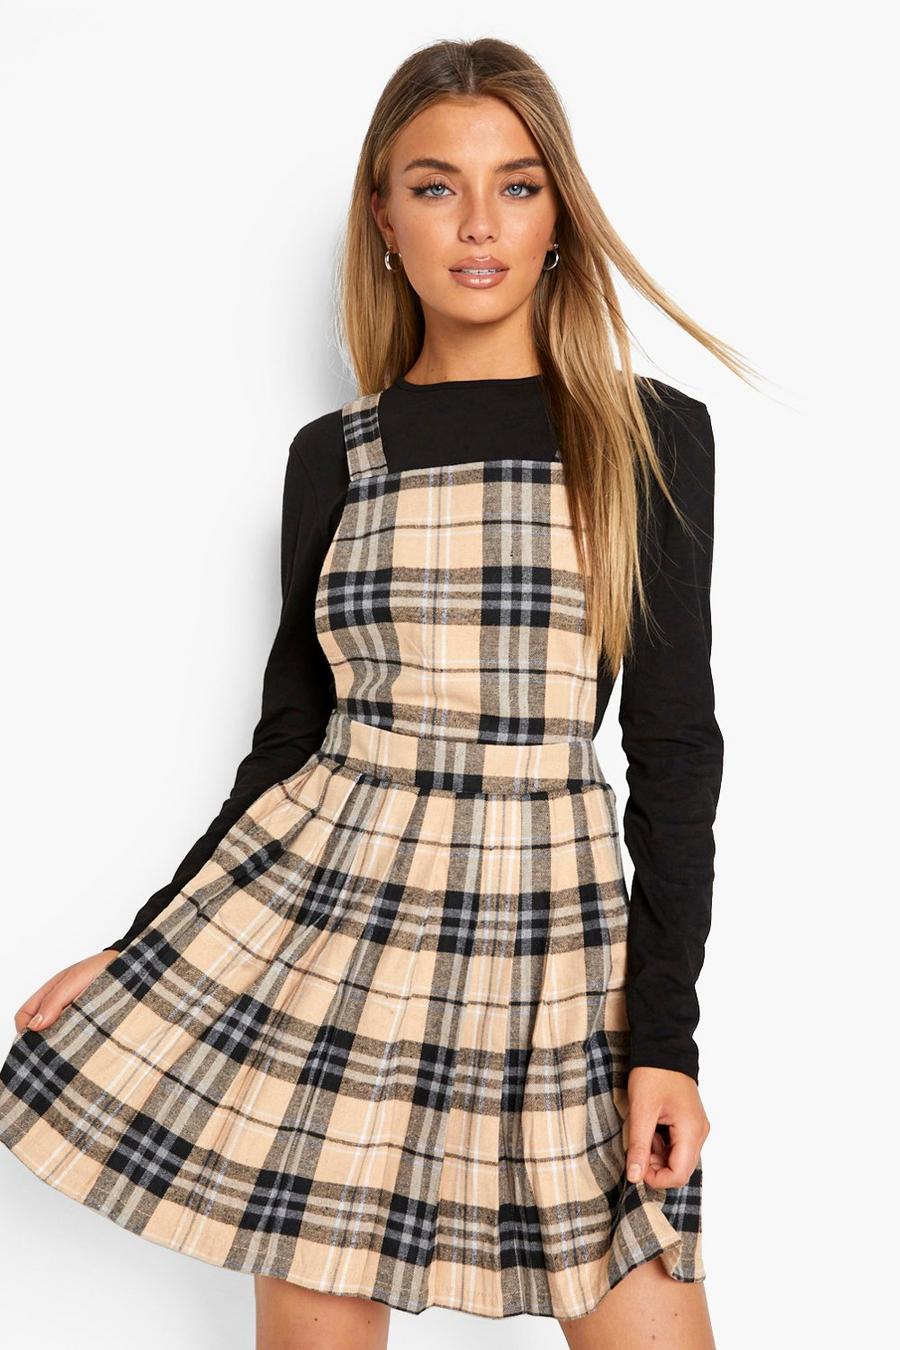 Tan marron Check Print Pleated Skirt Pinafore Dress